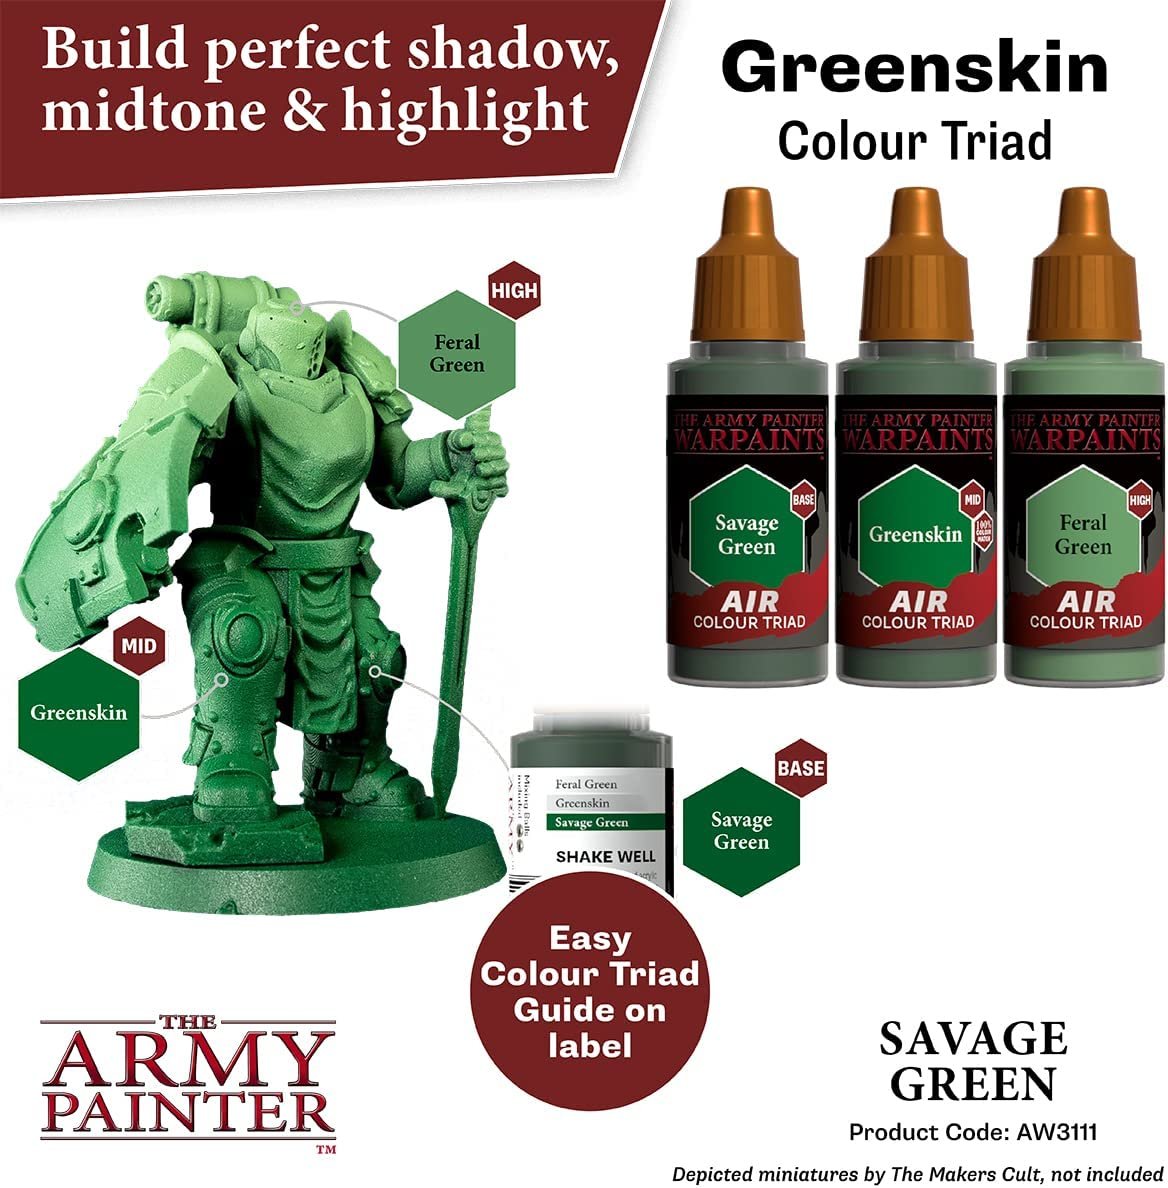 The Army Painter - Warpaints Air: Savage Green (18ml/0.6oz)